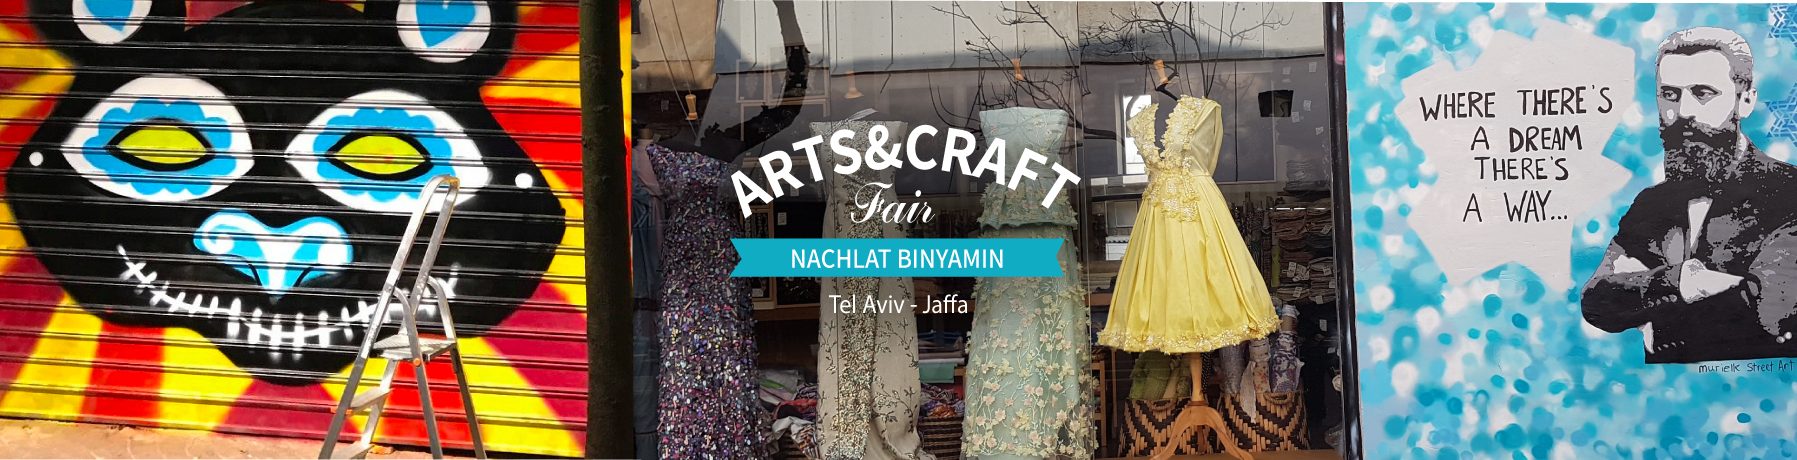 Artist&craft fair, Nachalat Binyamin, Tel Aviv Jaffa